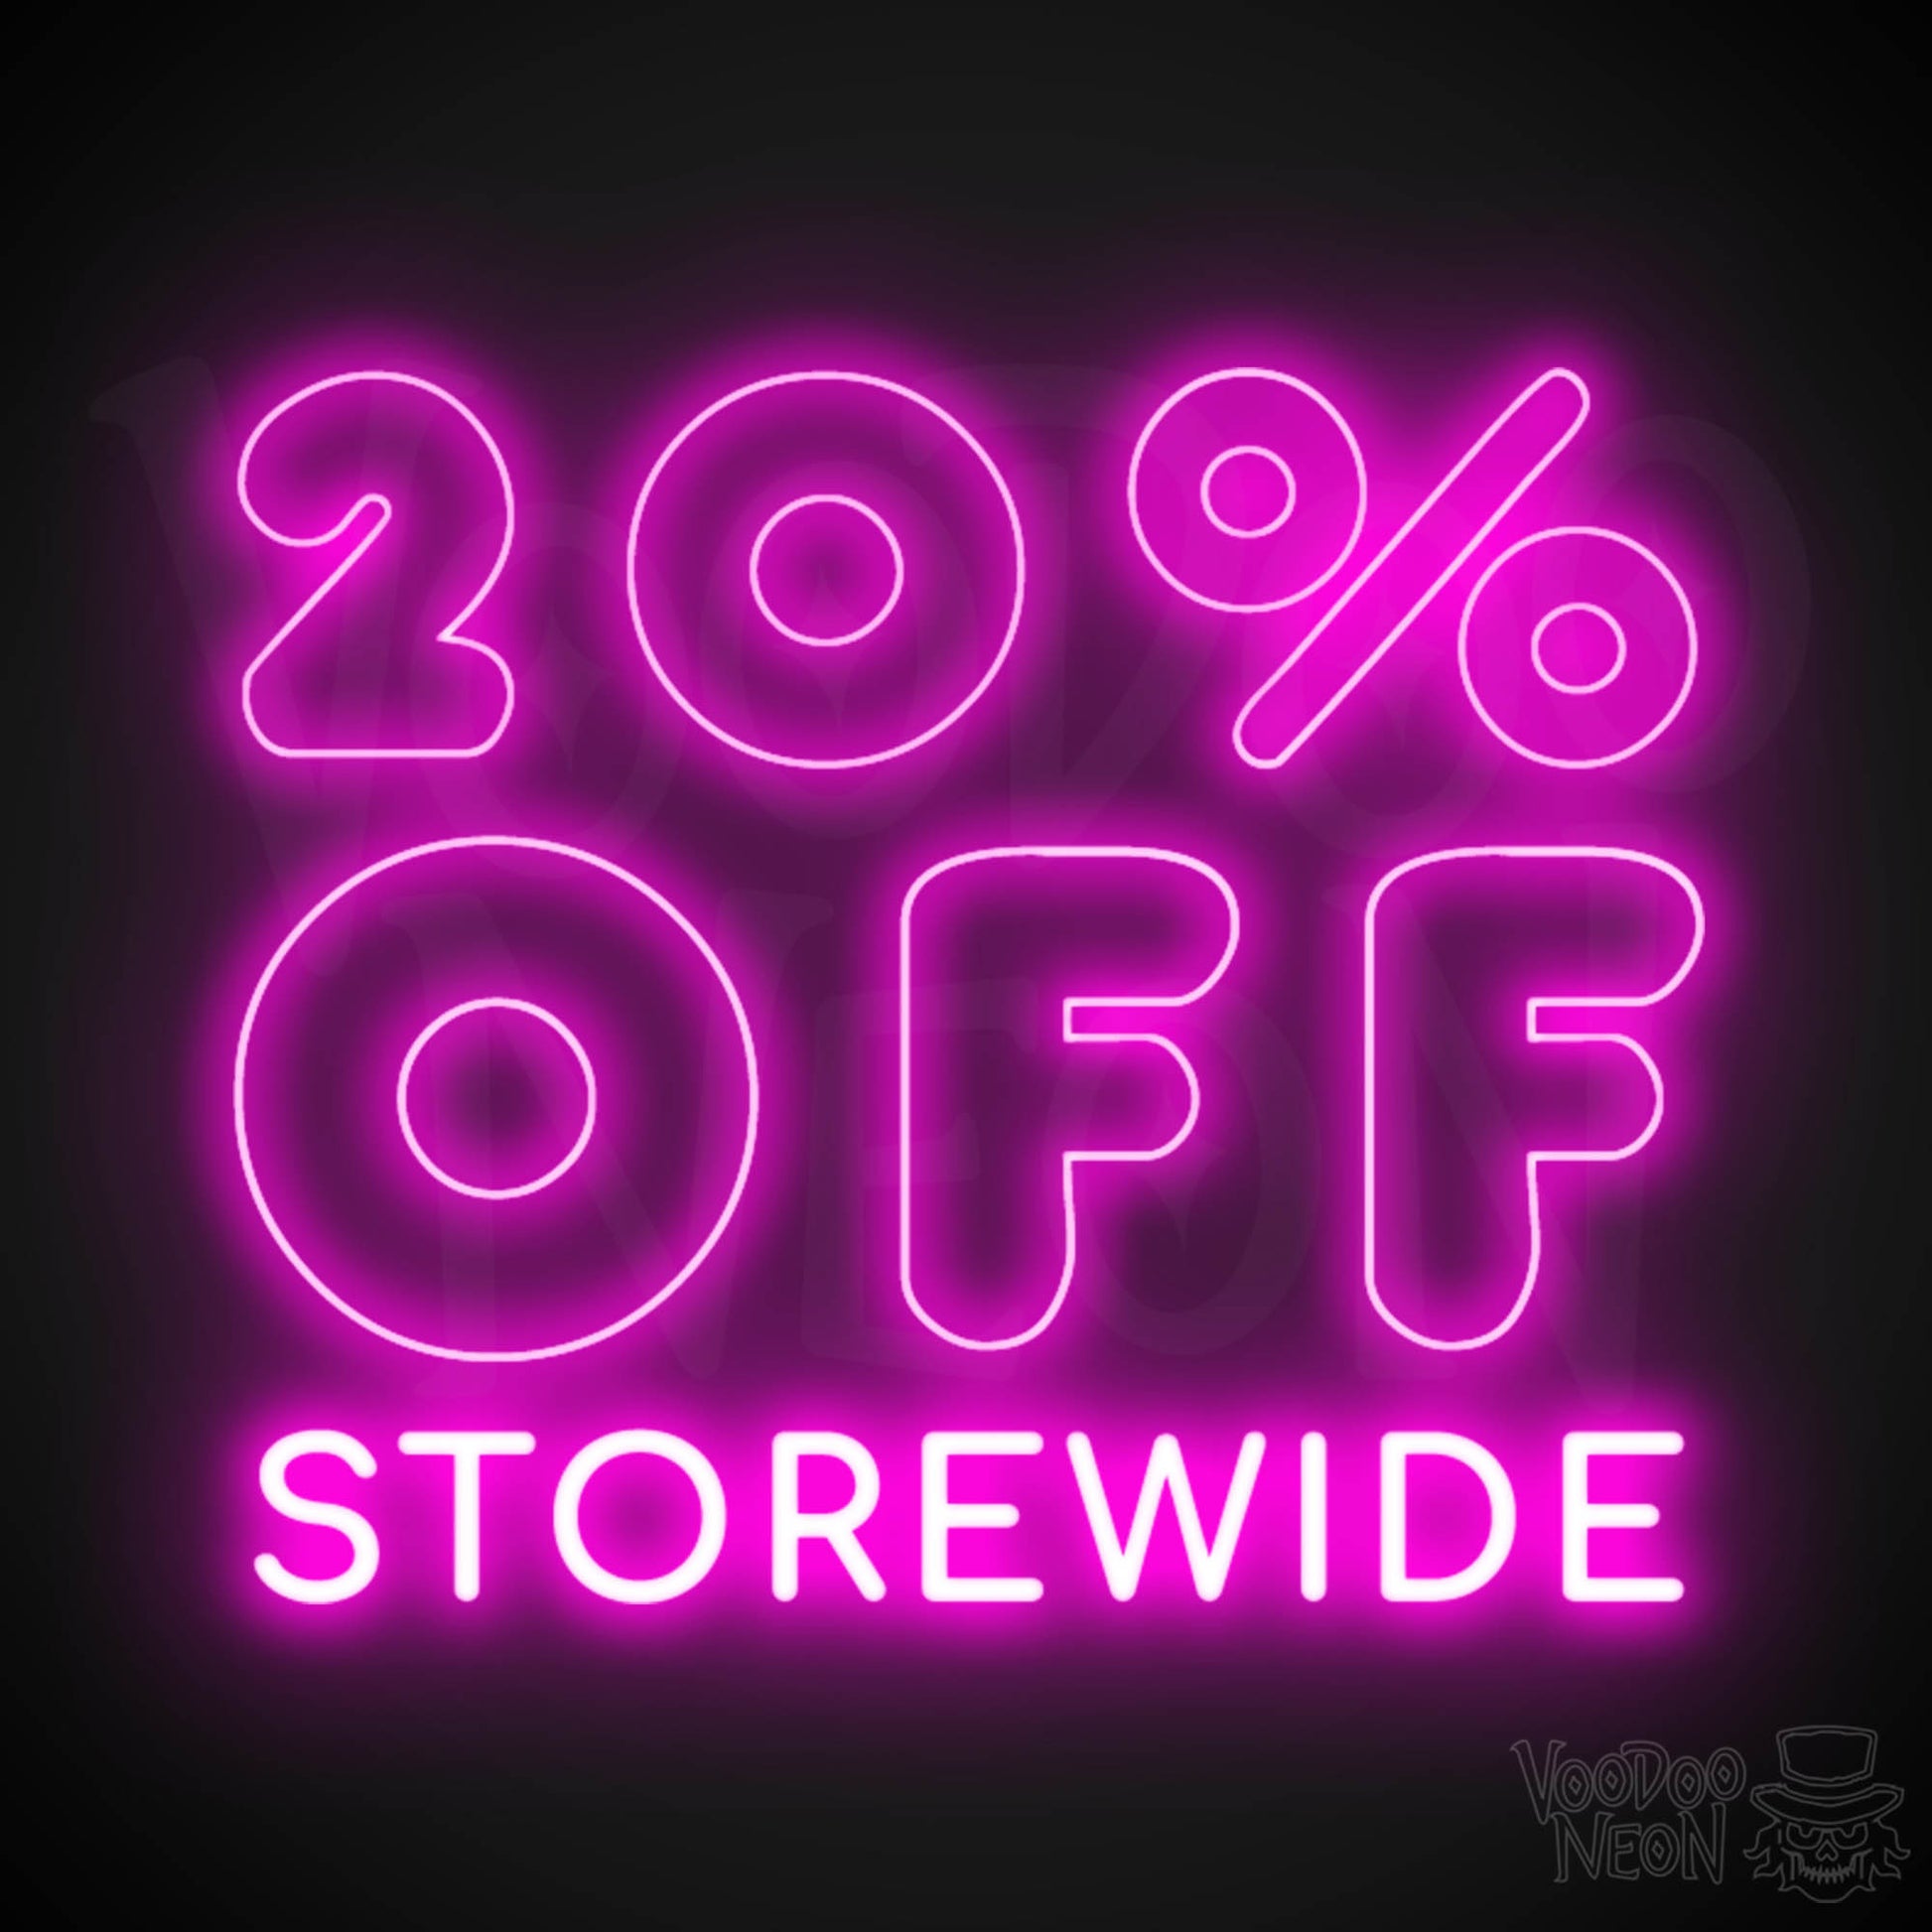 20% Off Storewide Neon Sign - 20% Off Storewide Sign - LED Shop Sign - Color Pink